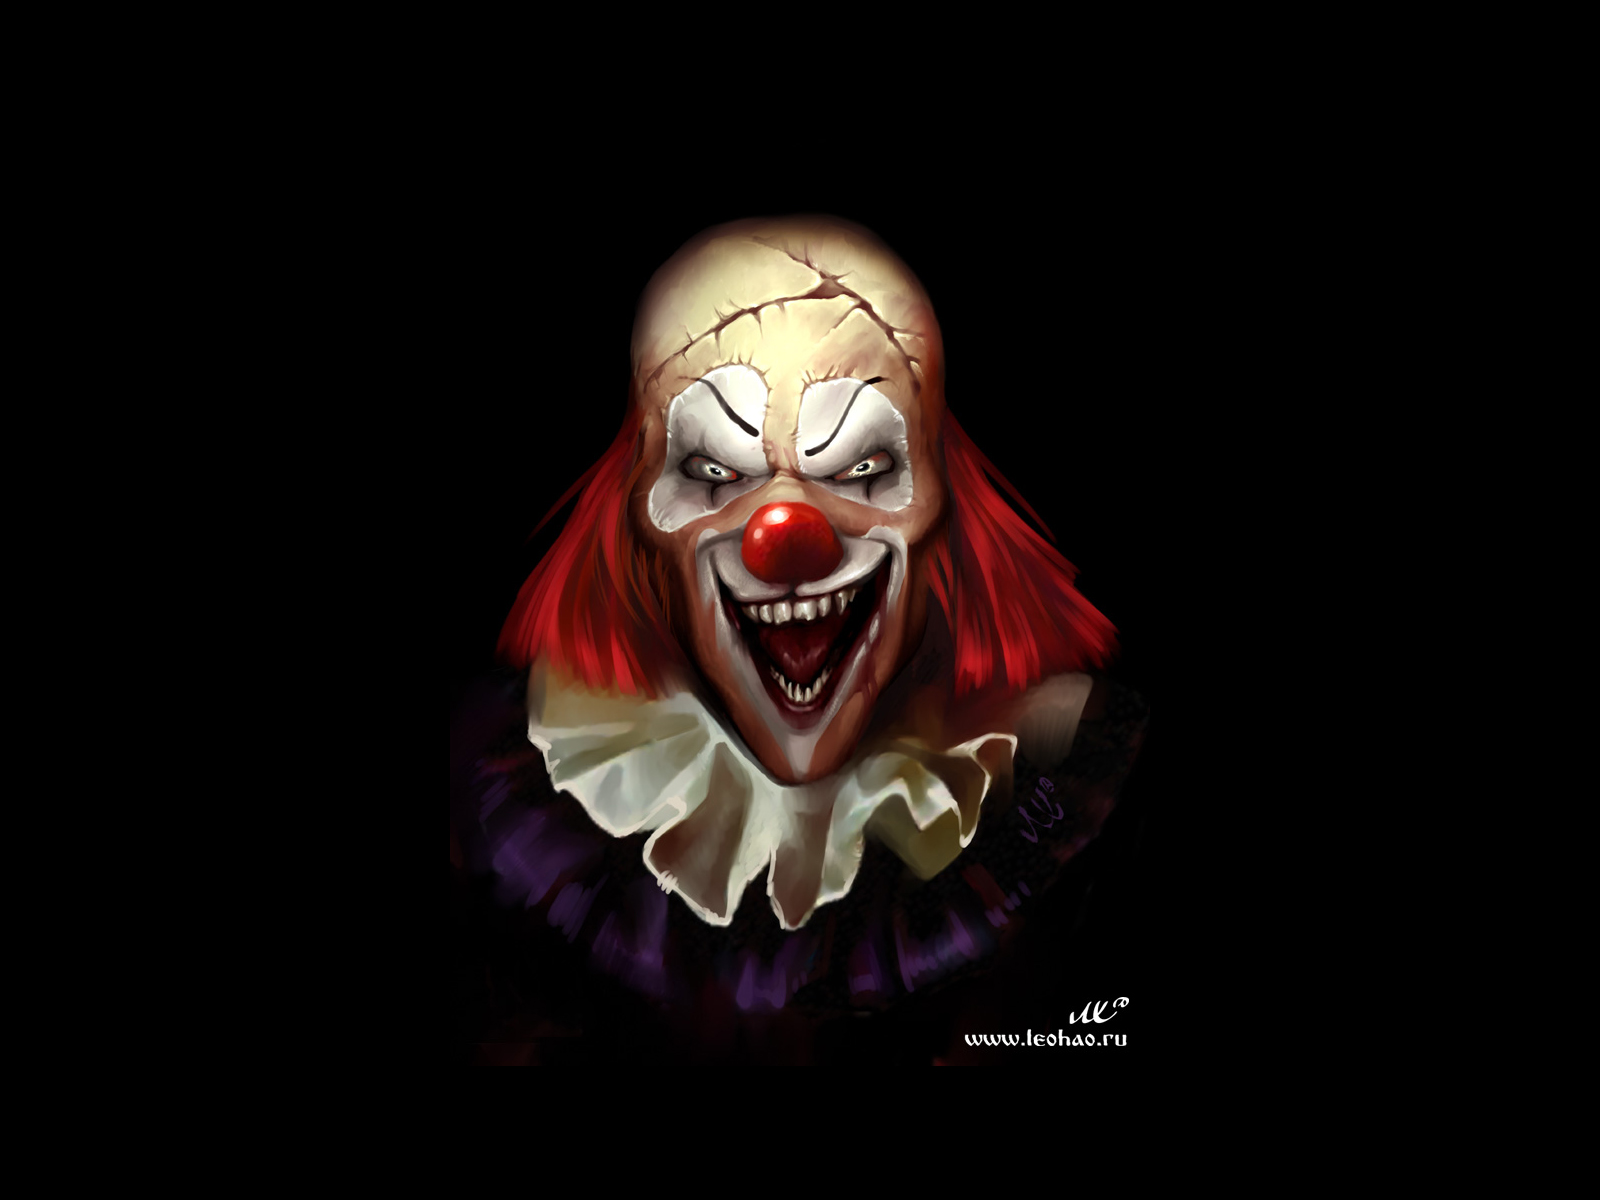 clown Wallpaper Background 21339